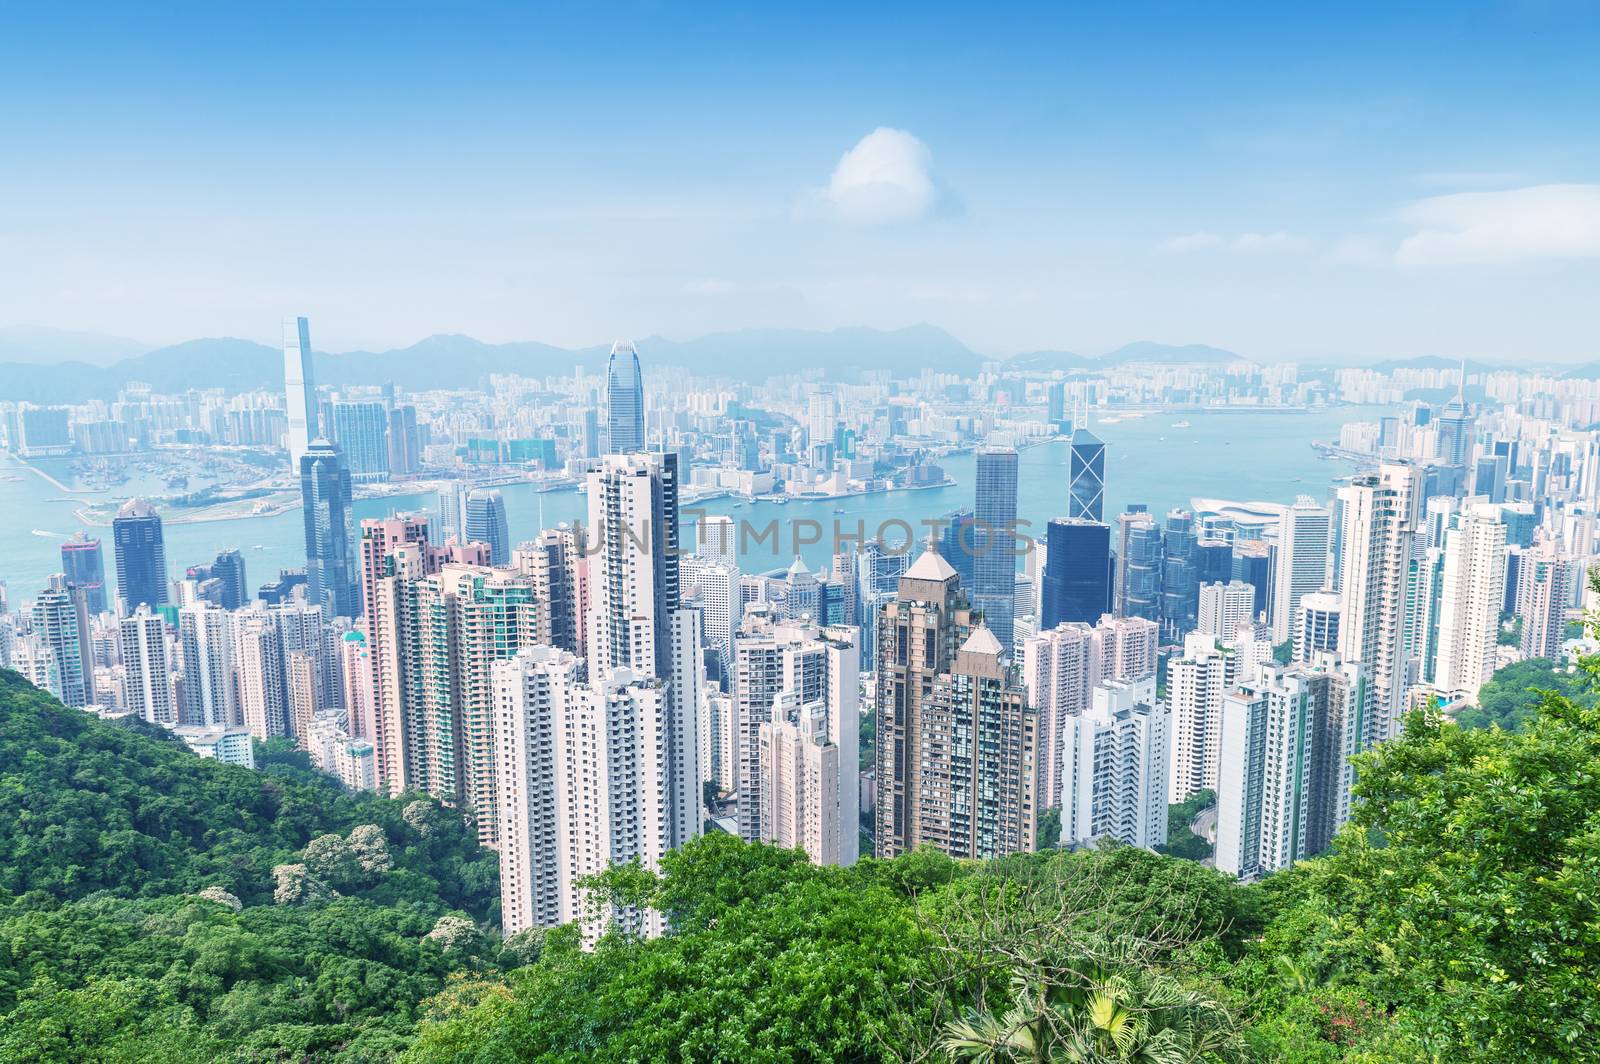 Skyscrapers of Hong Kong by jovannig